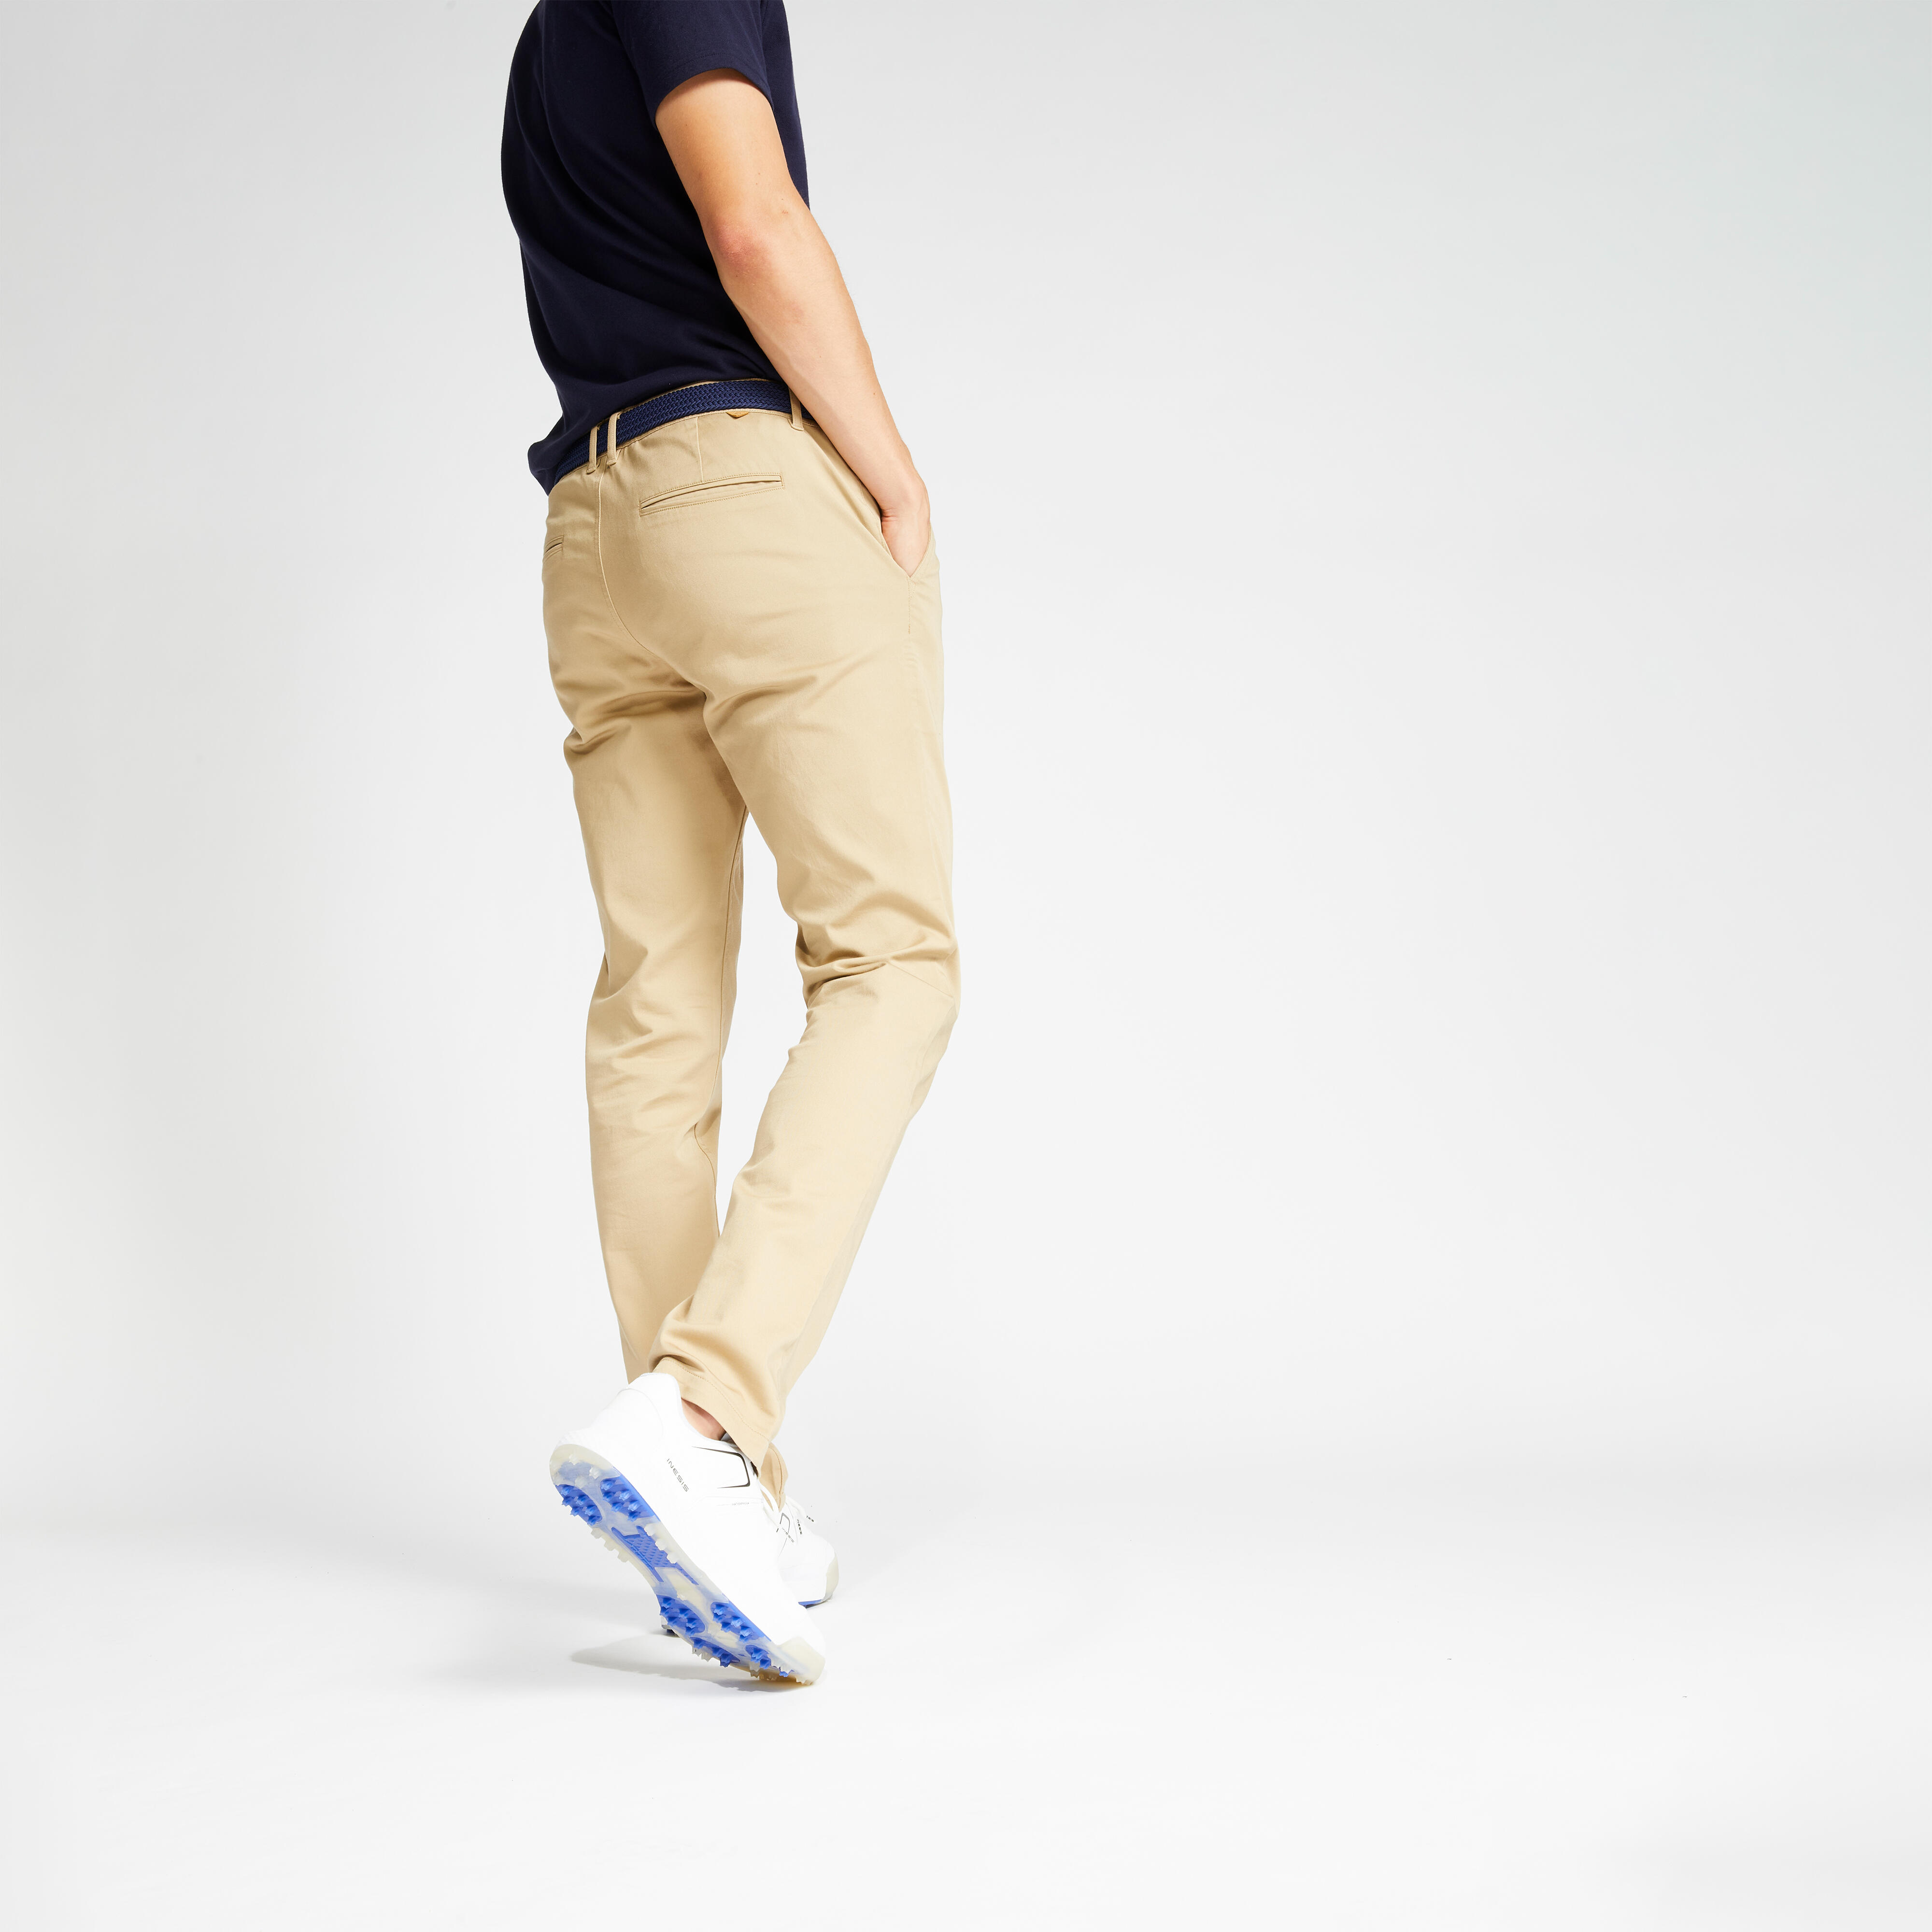 Men's Golf Pants - All in Motion Khaki 38x30 1 ct